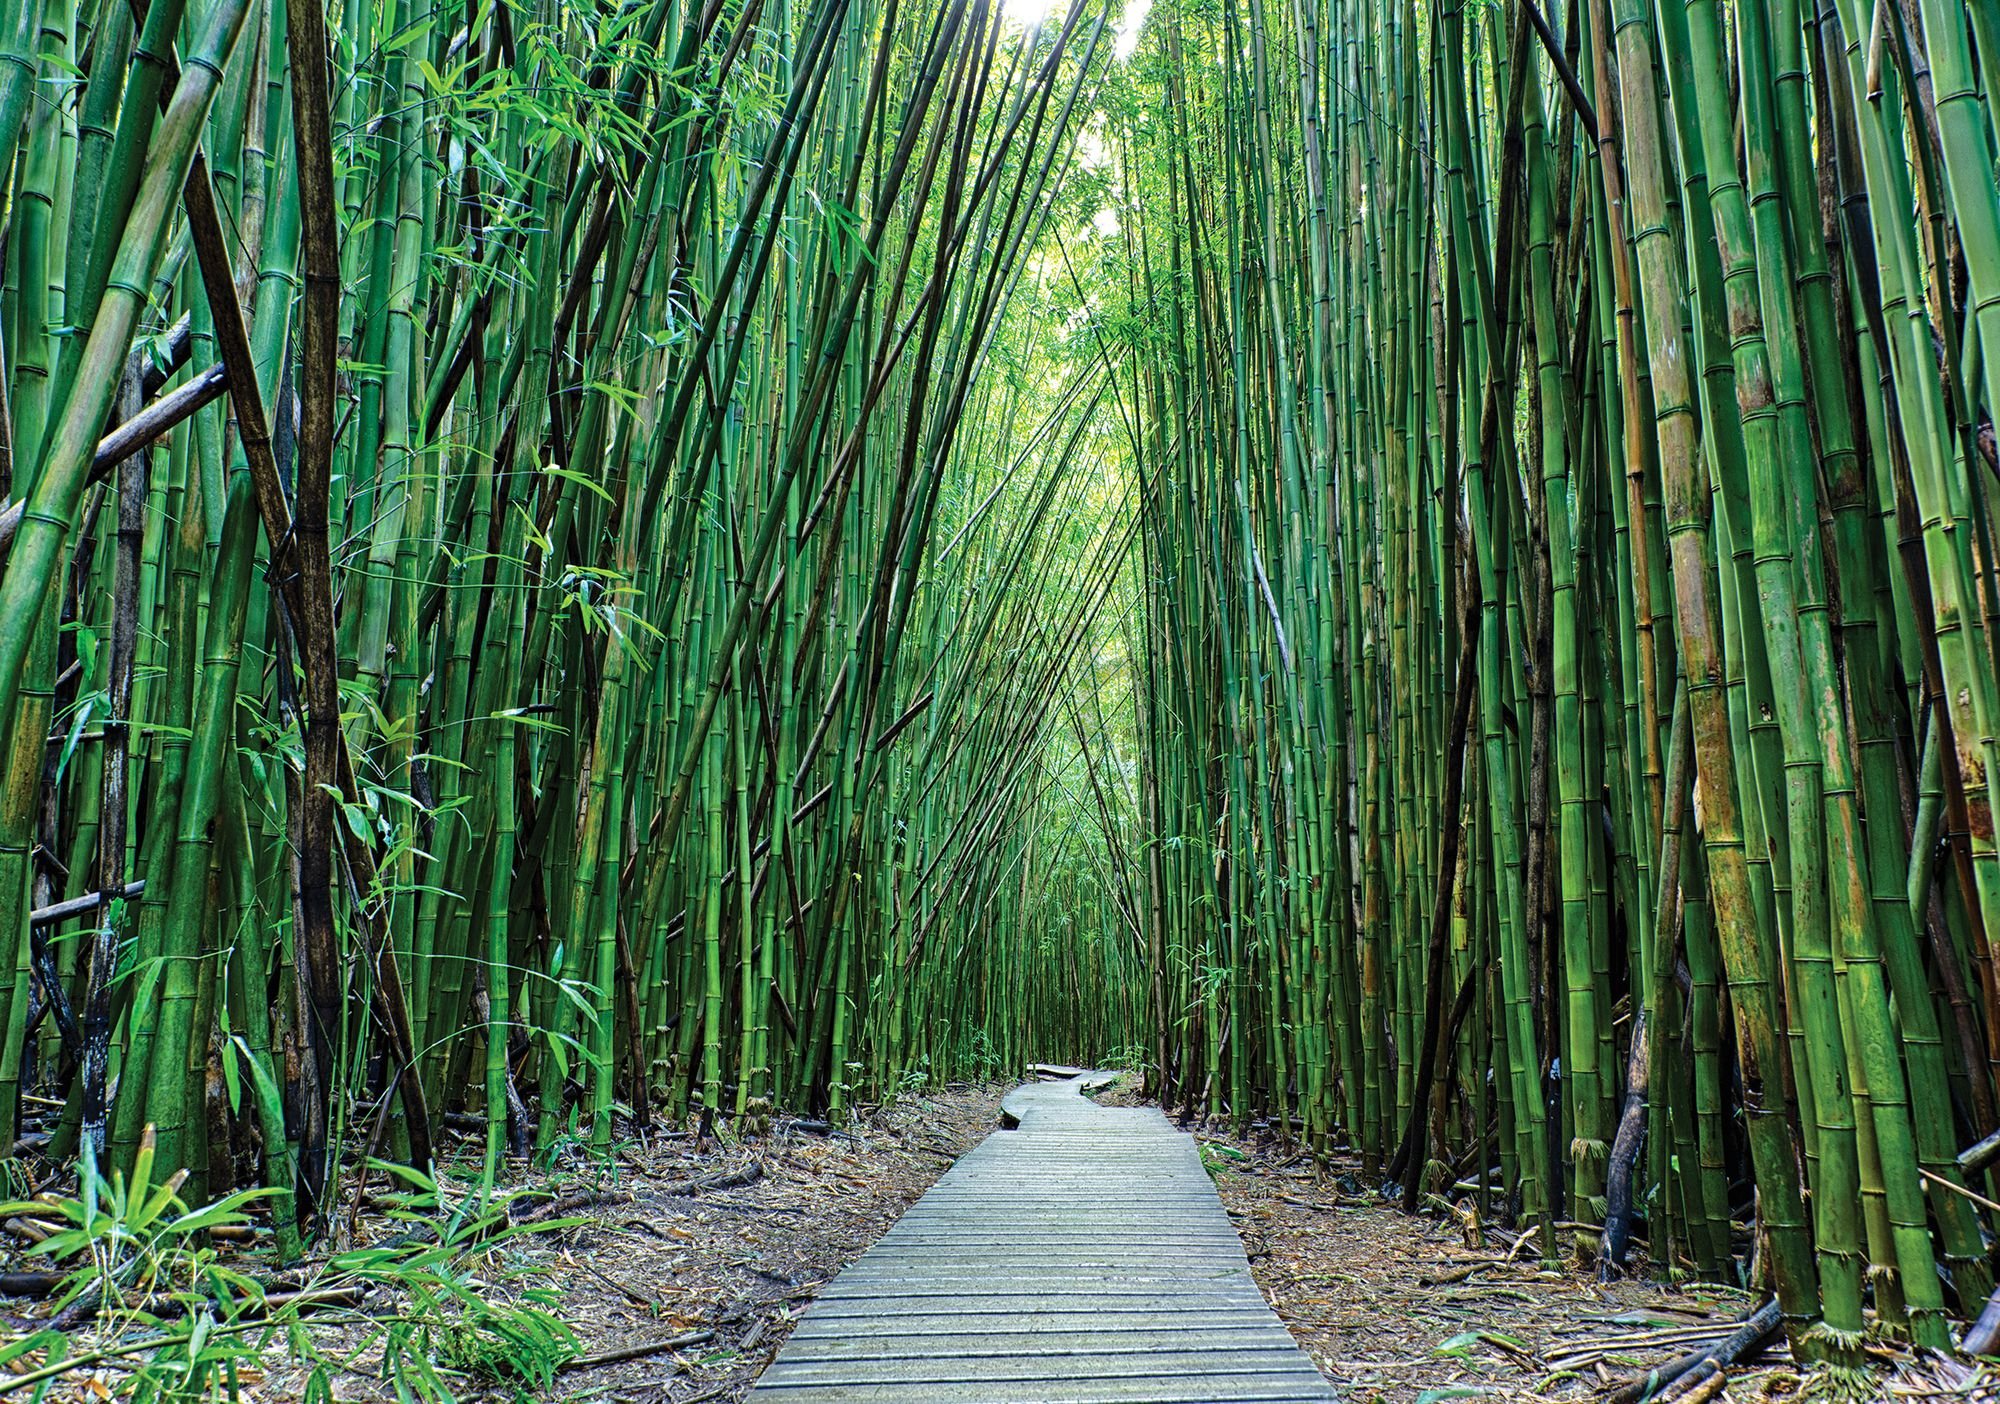 Fototapeta vliesová: Les bambusu (2) - 184x254 cm